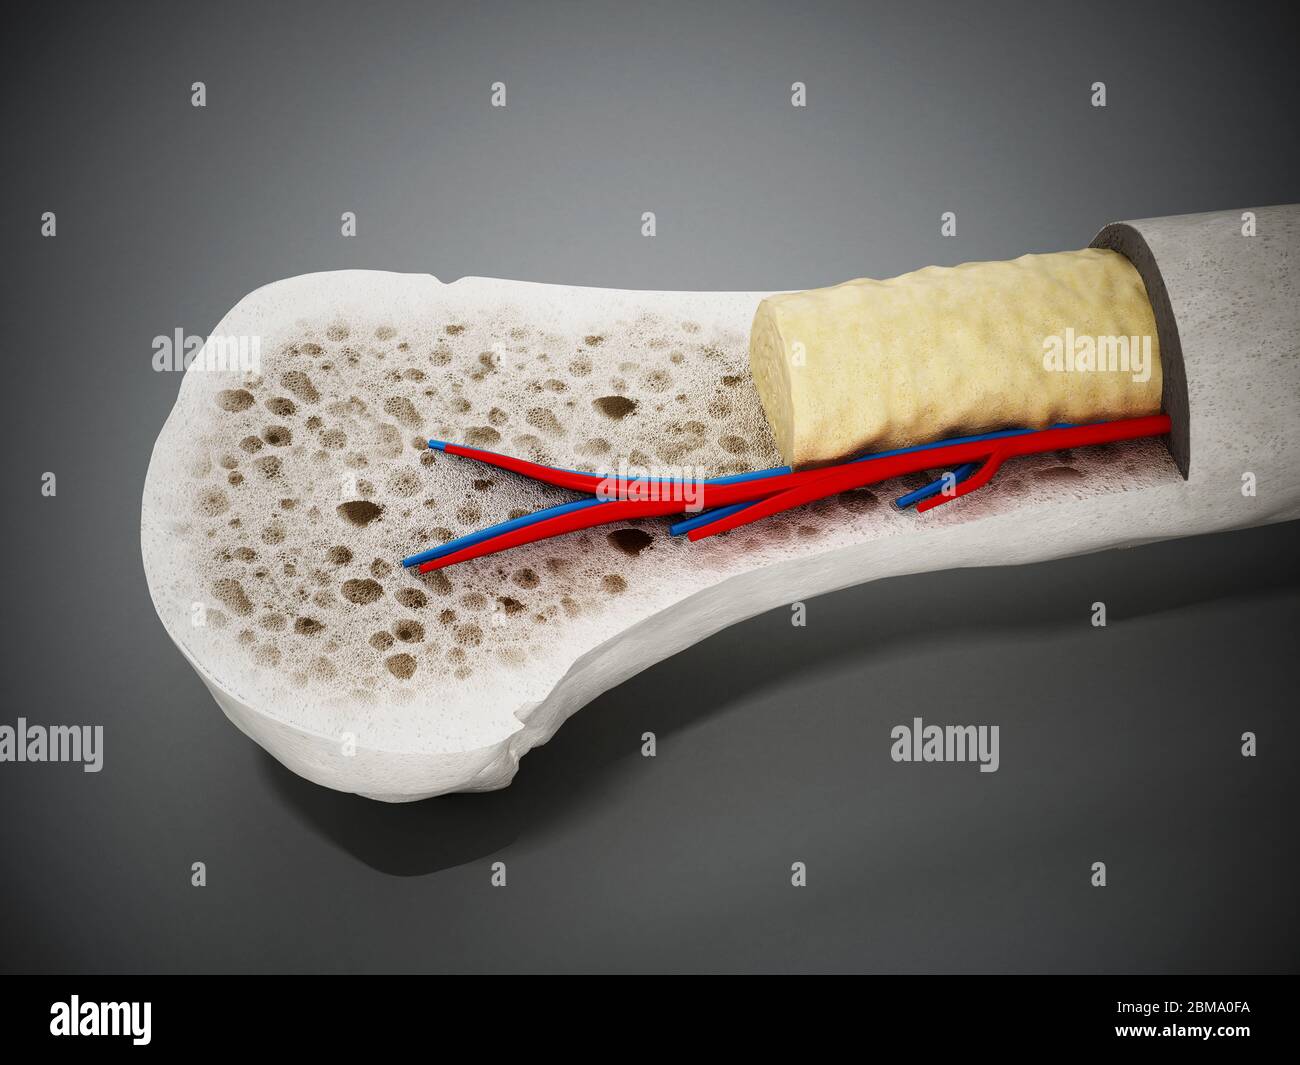 Cross section of a human bone showing bone marrow, spongy bone and blood vessels. 3D illustration. Stock Photo